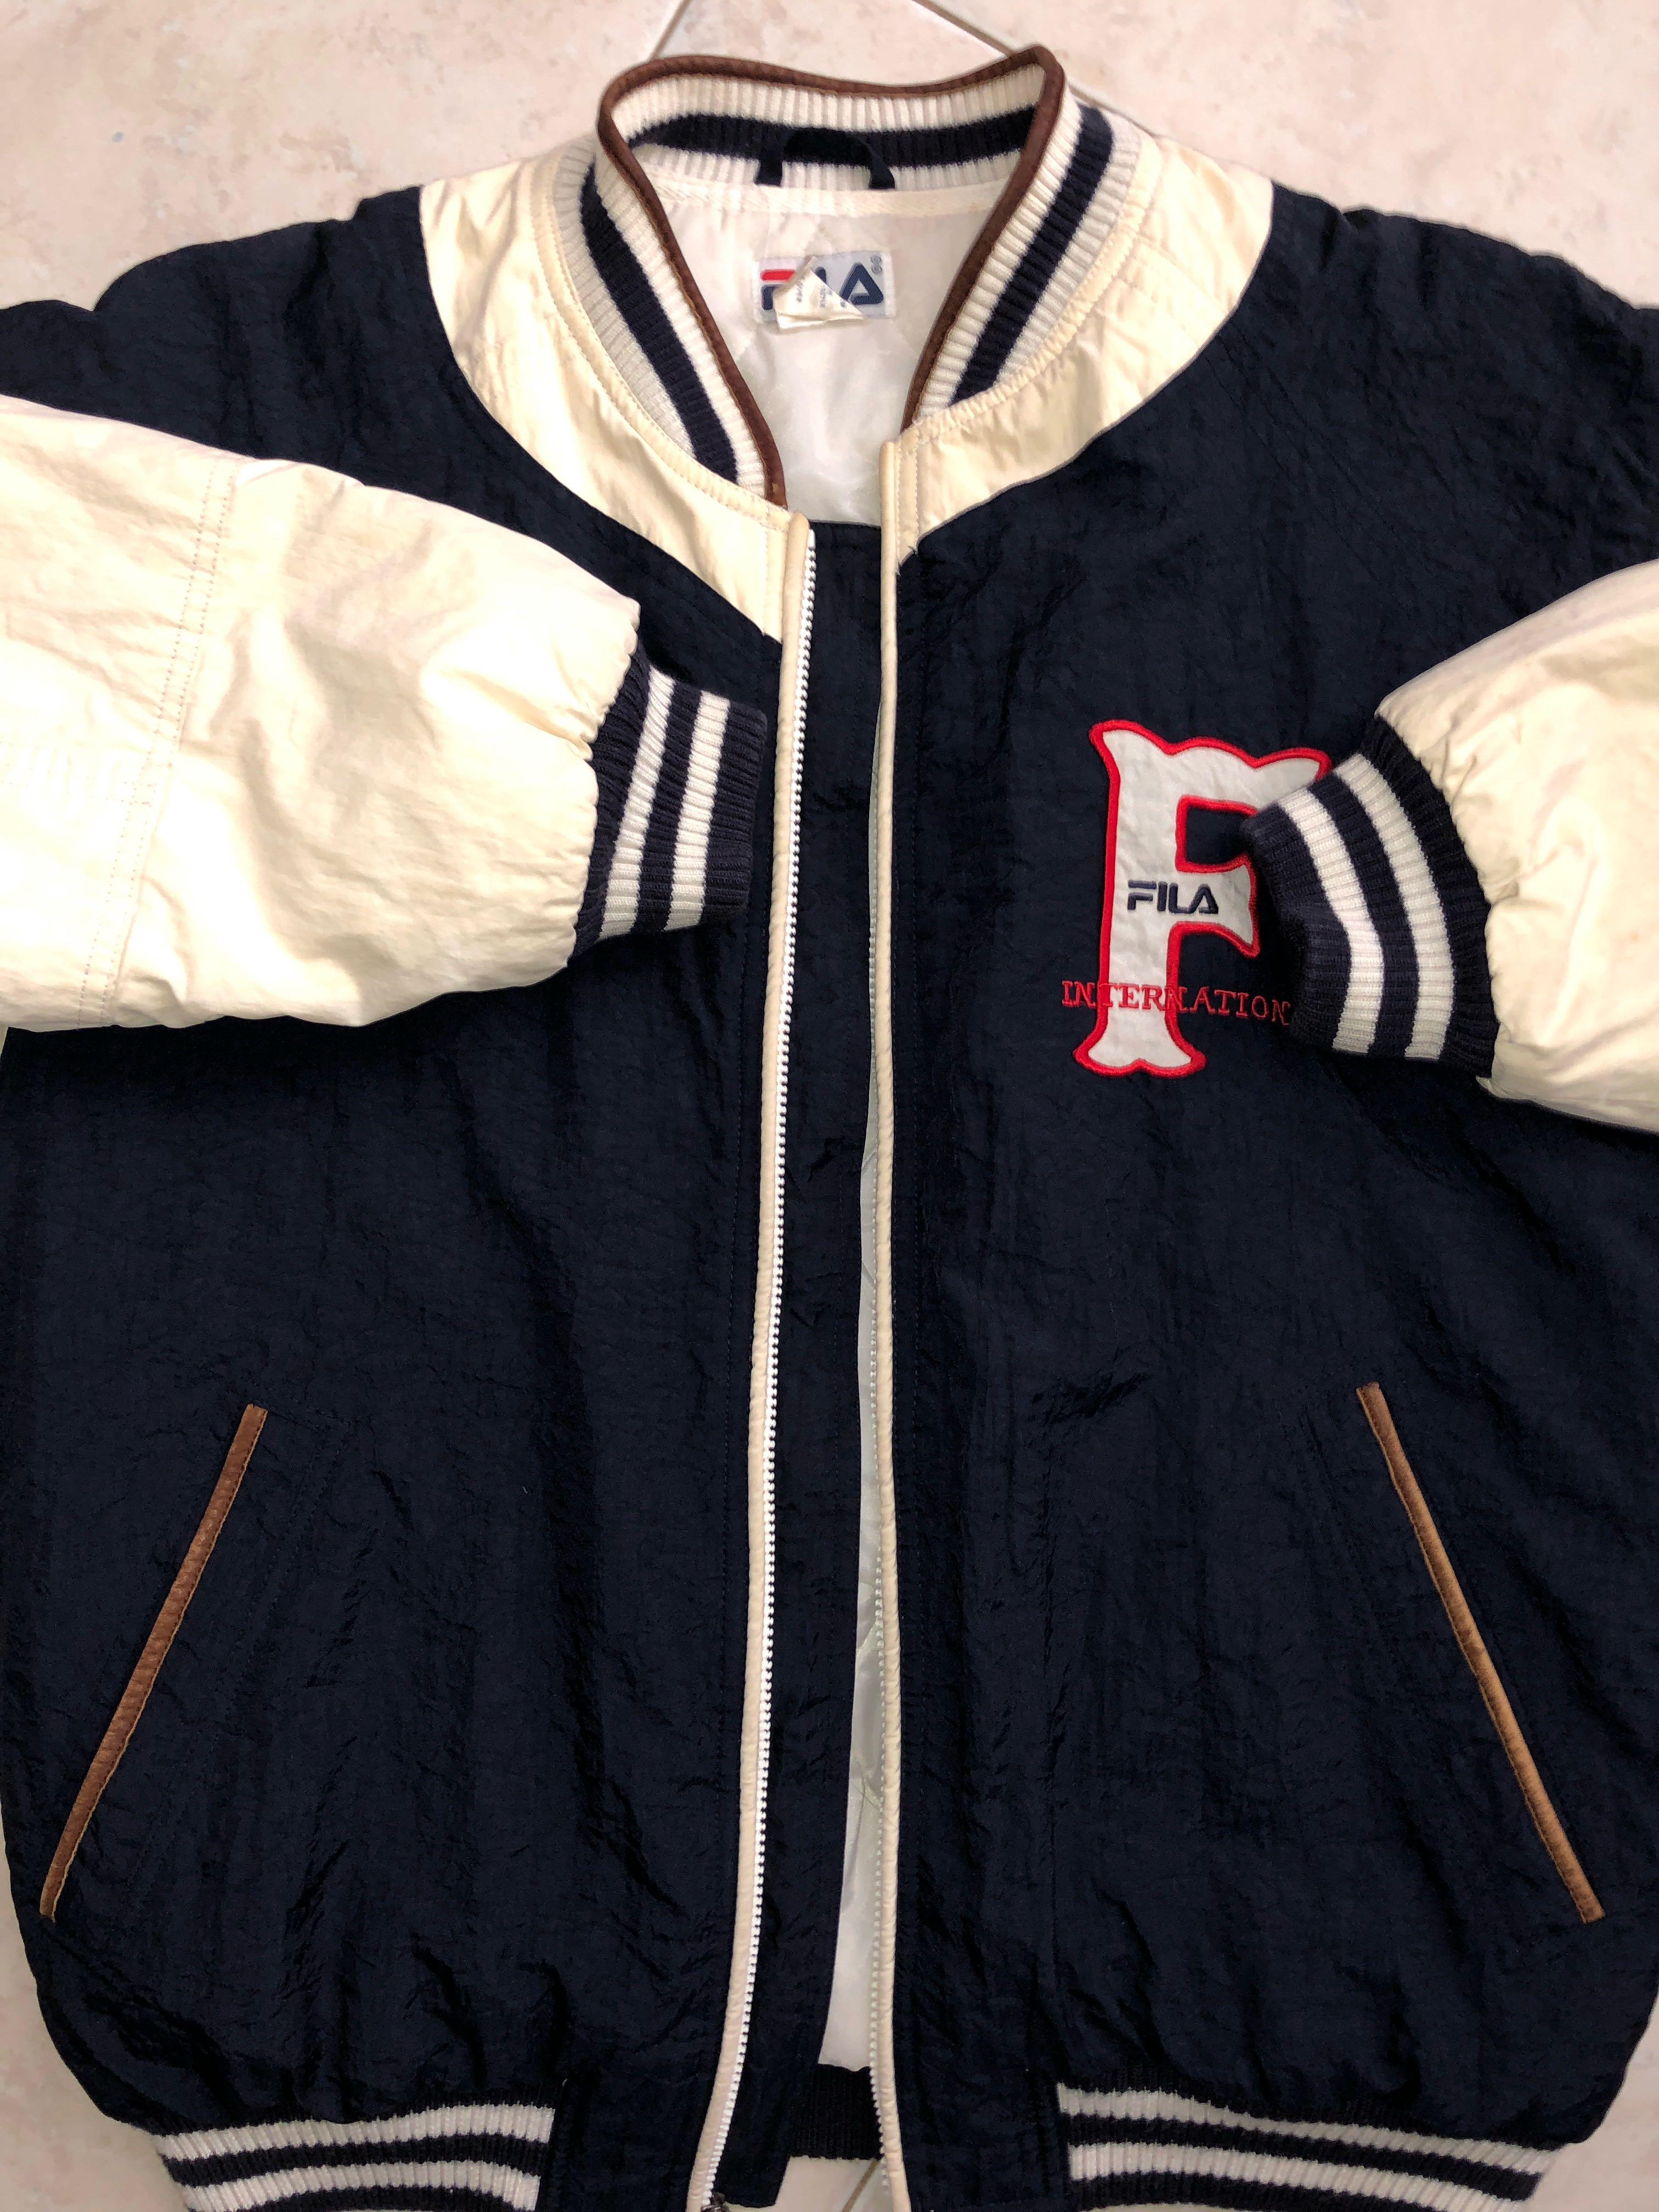 fila old school jacket